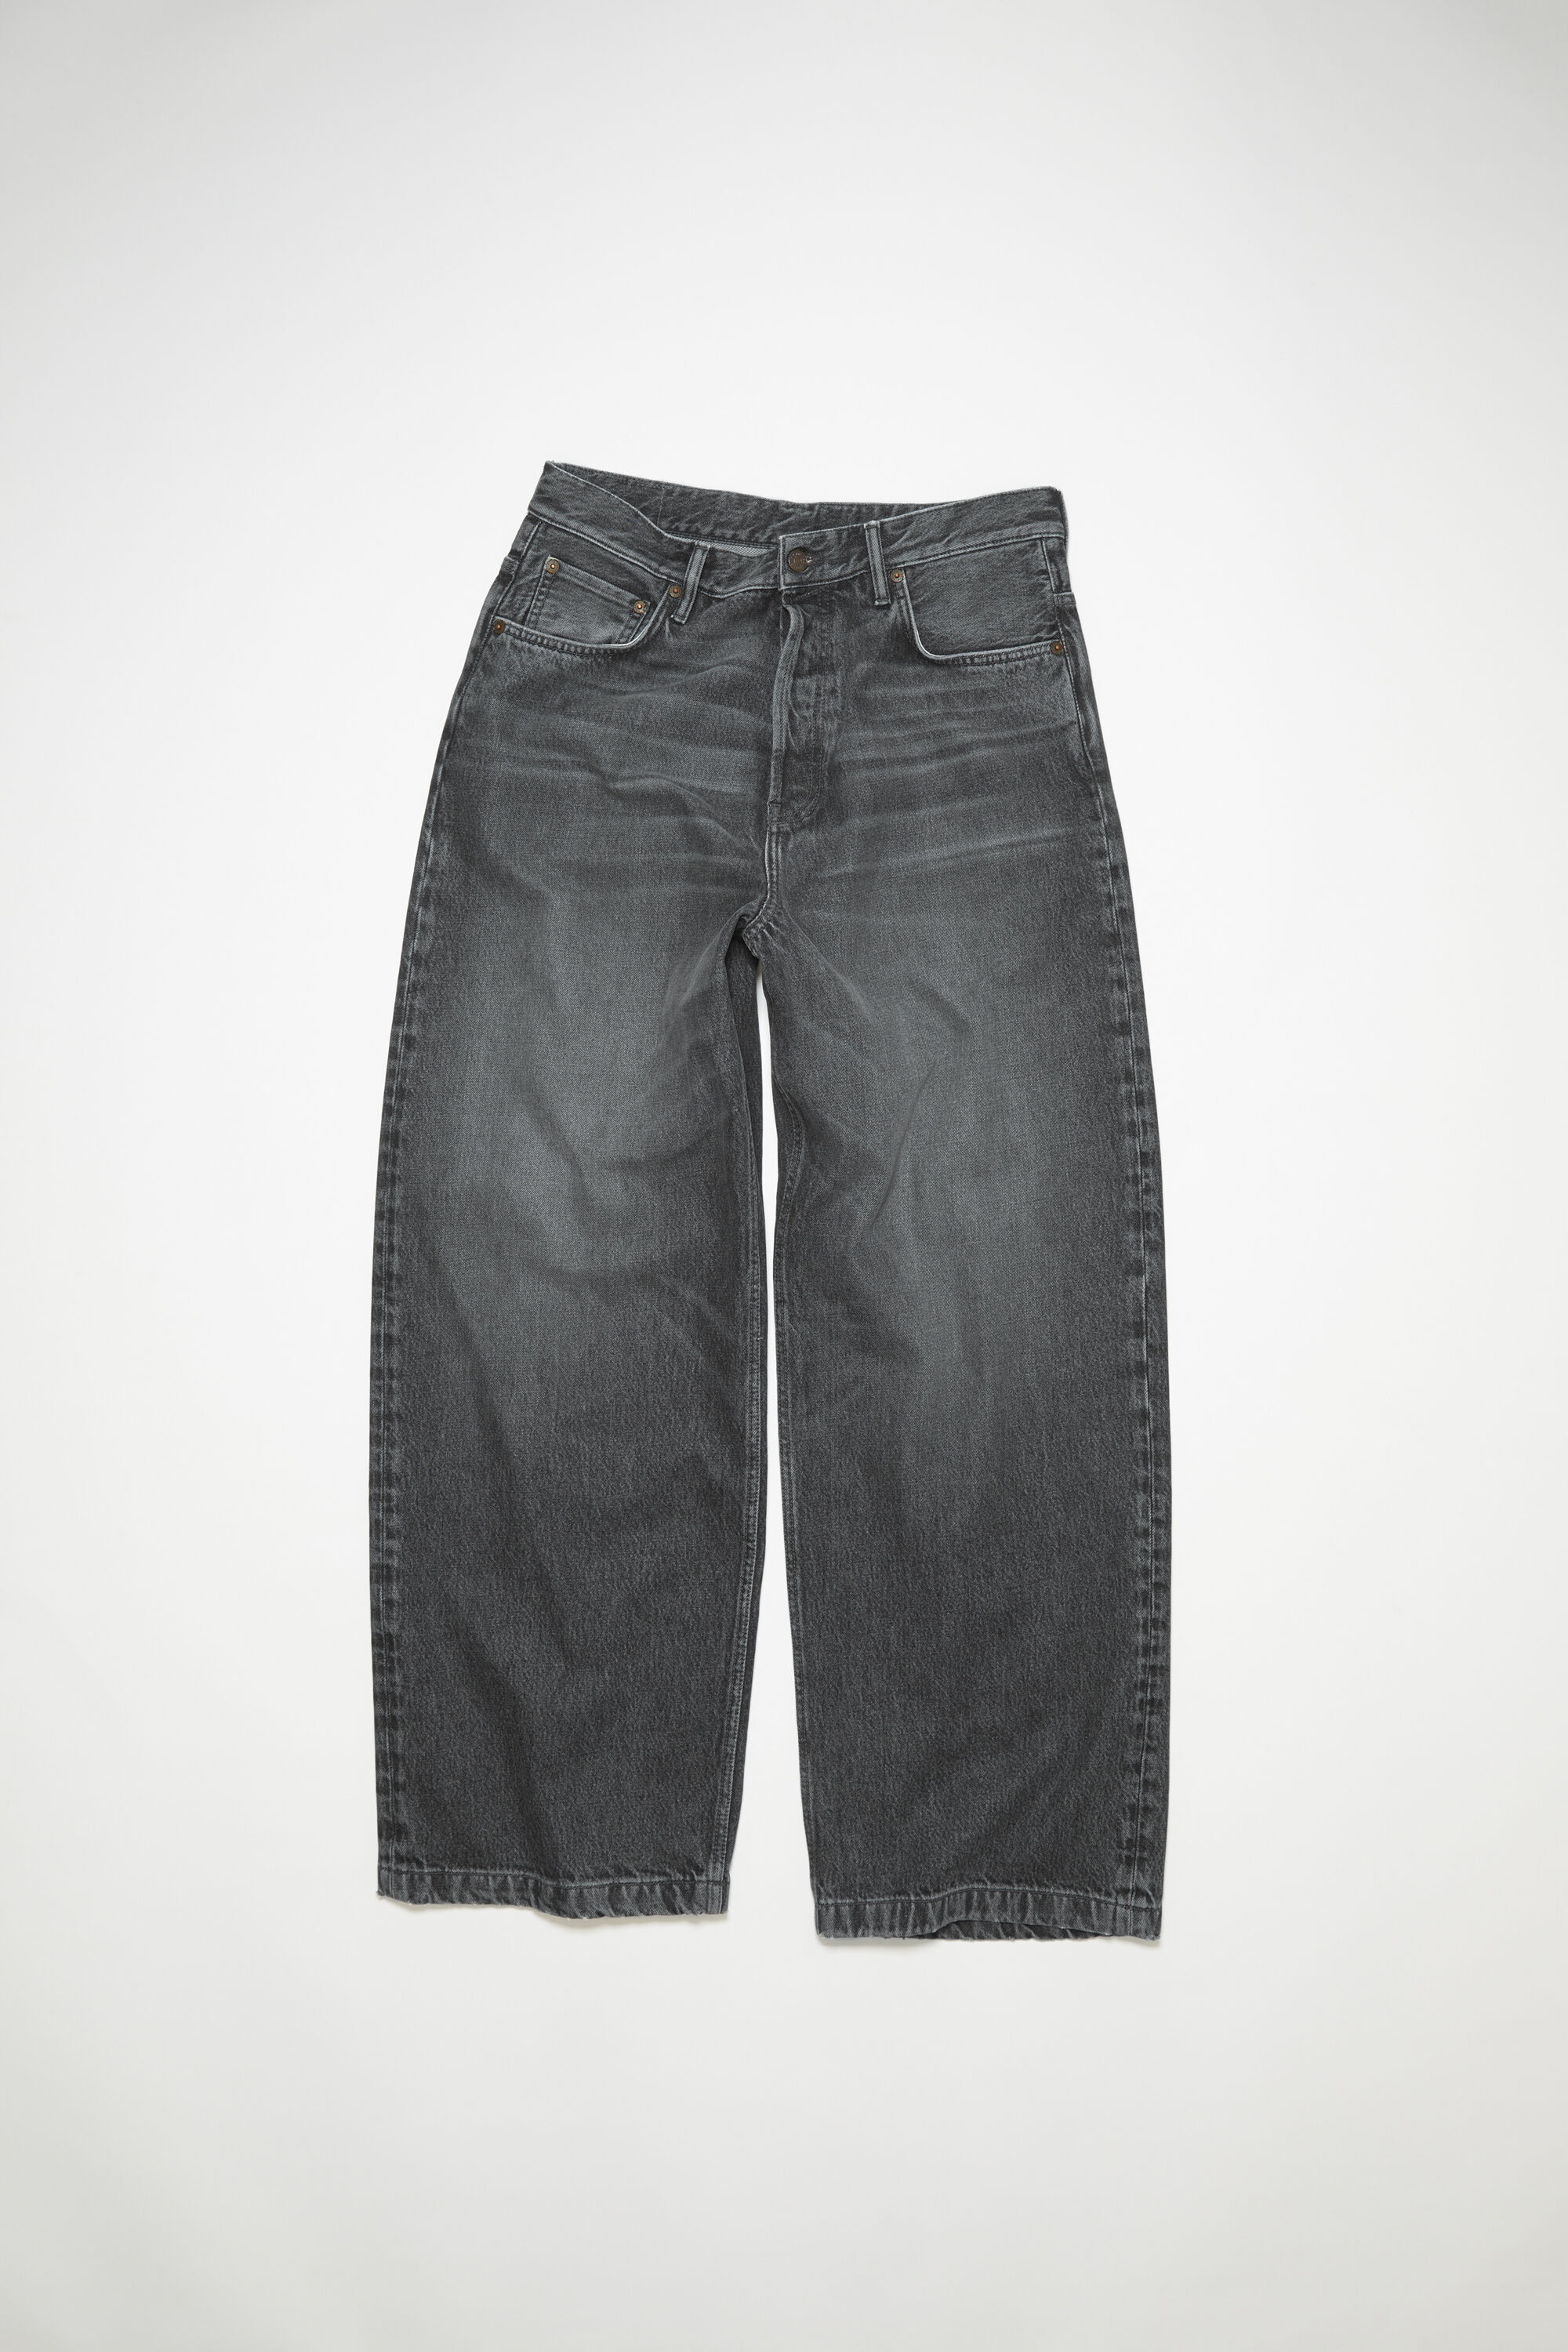 Acne Studios – Men's jeans